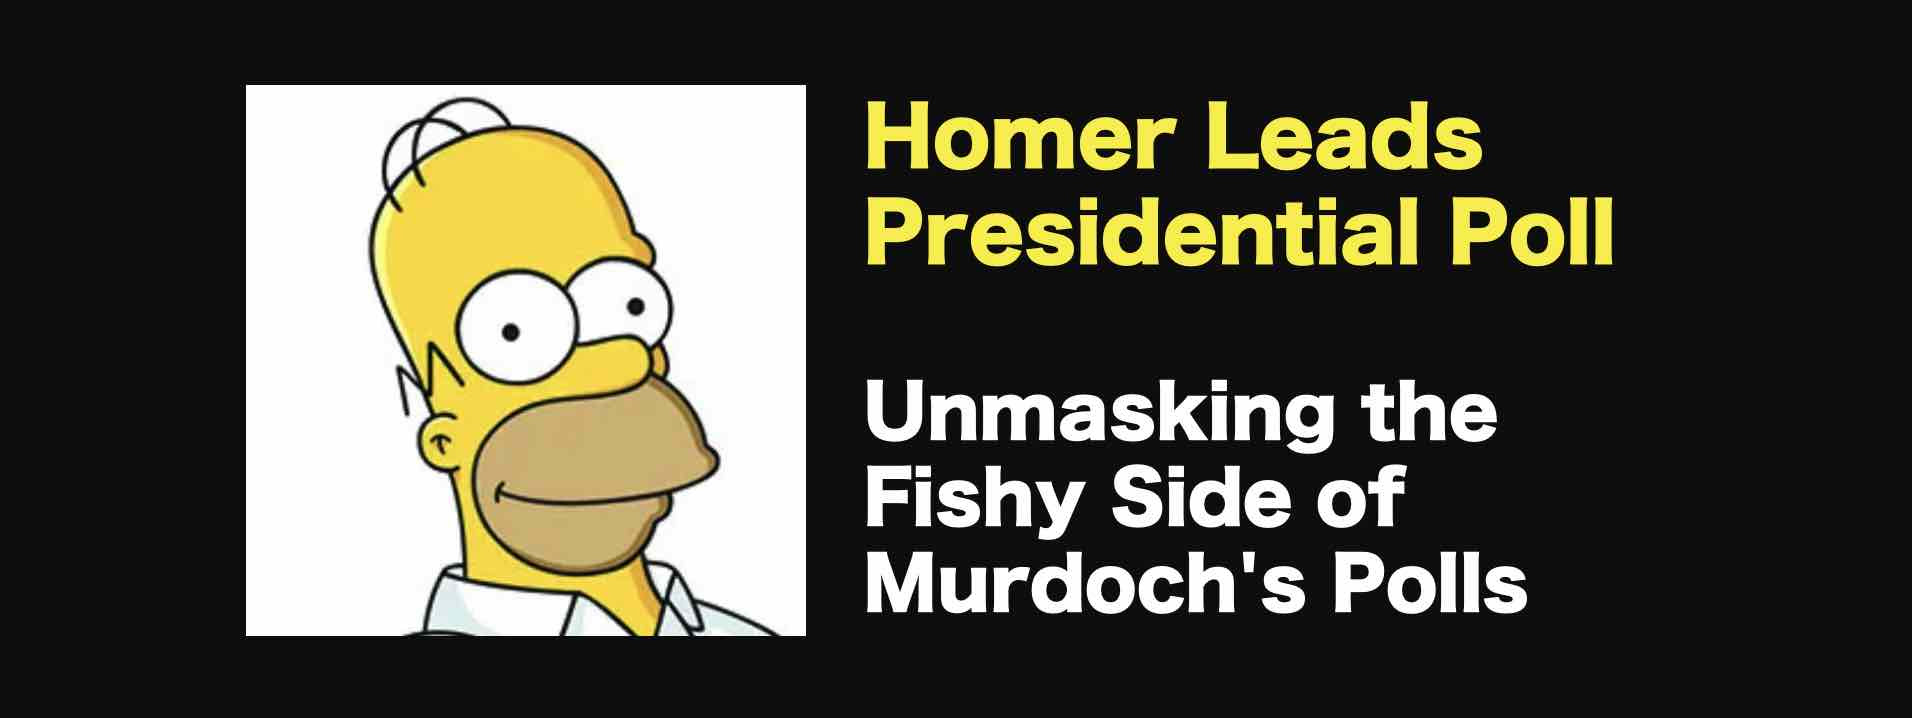 Homer Leads Presidential Poll. Unmasking the Fishy Side of Murdoch's Polls